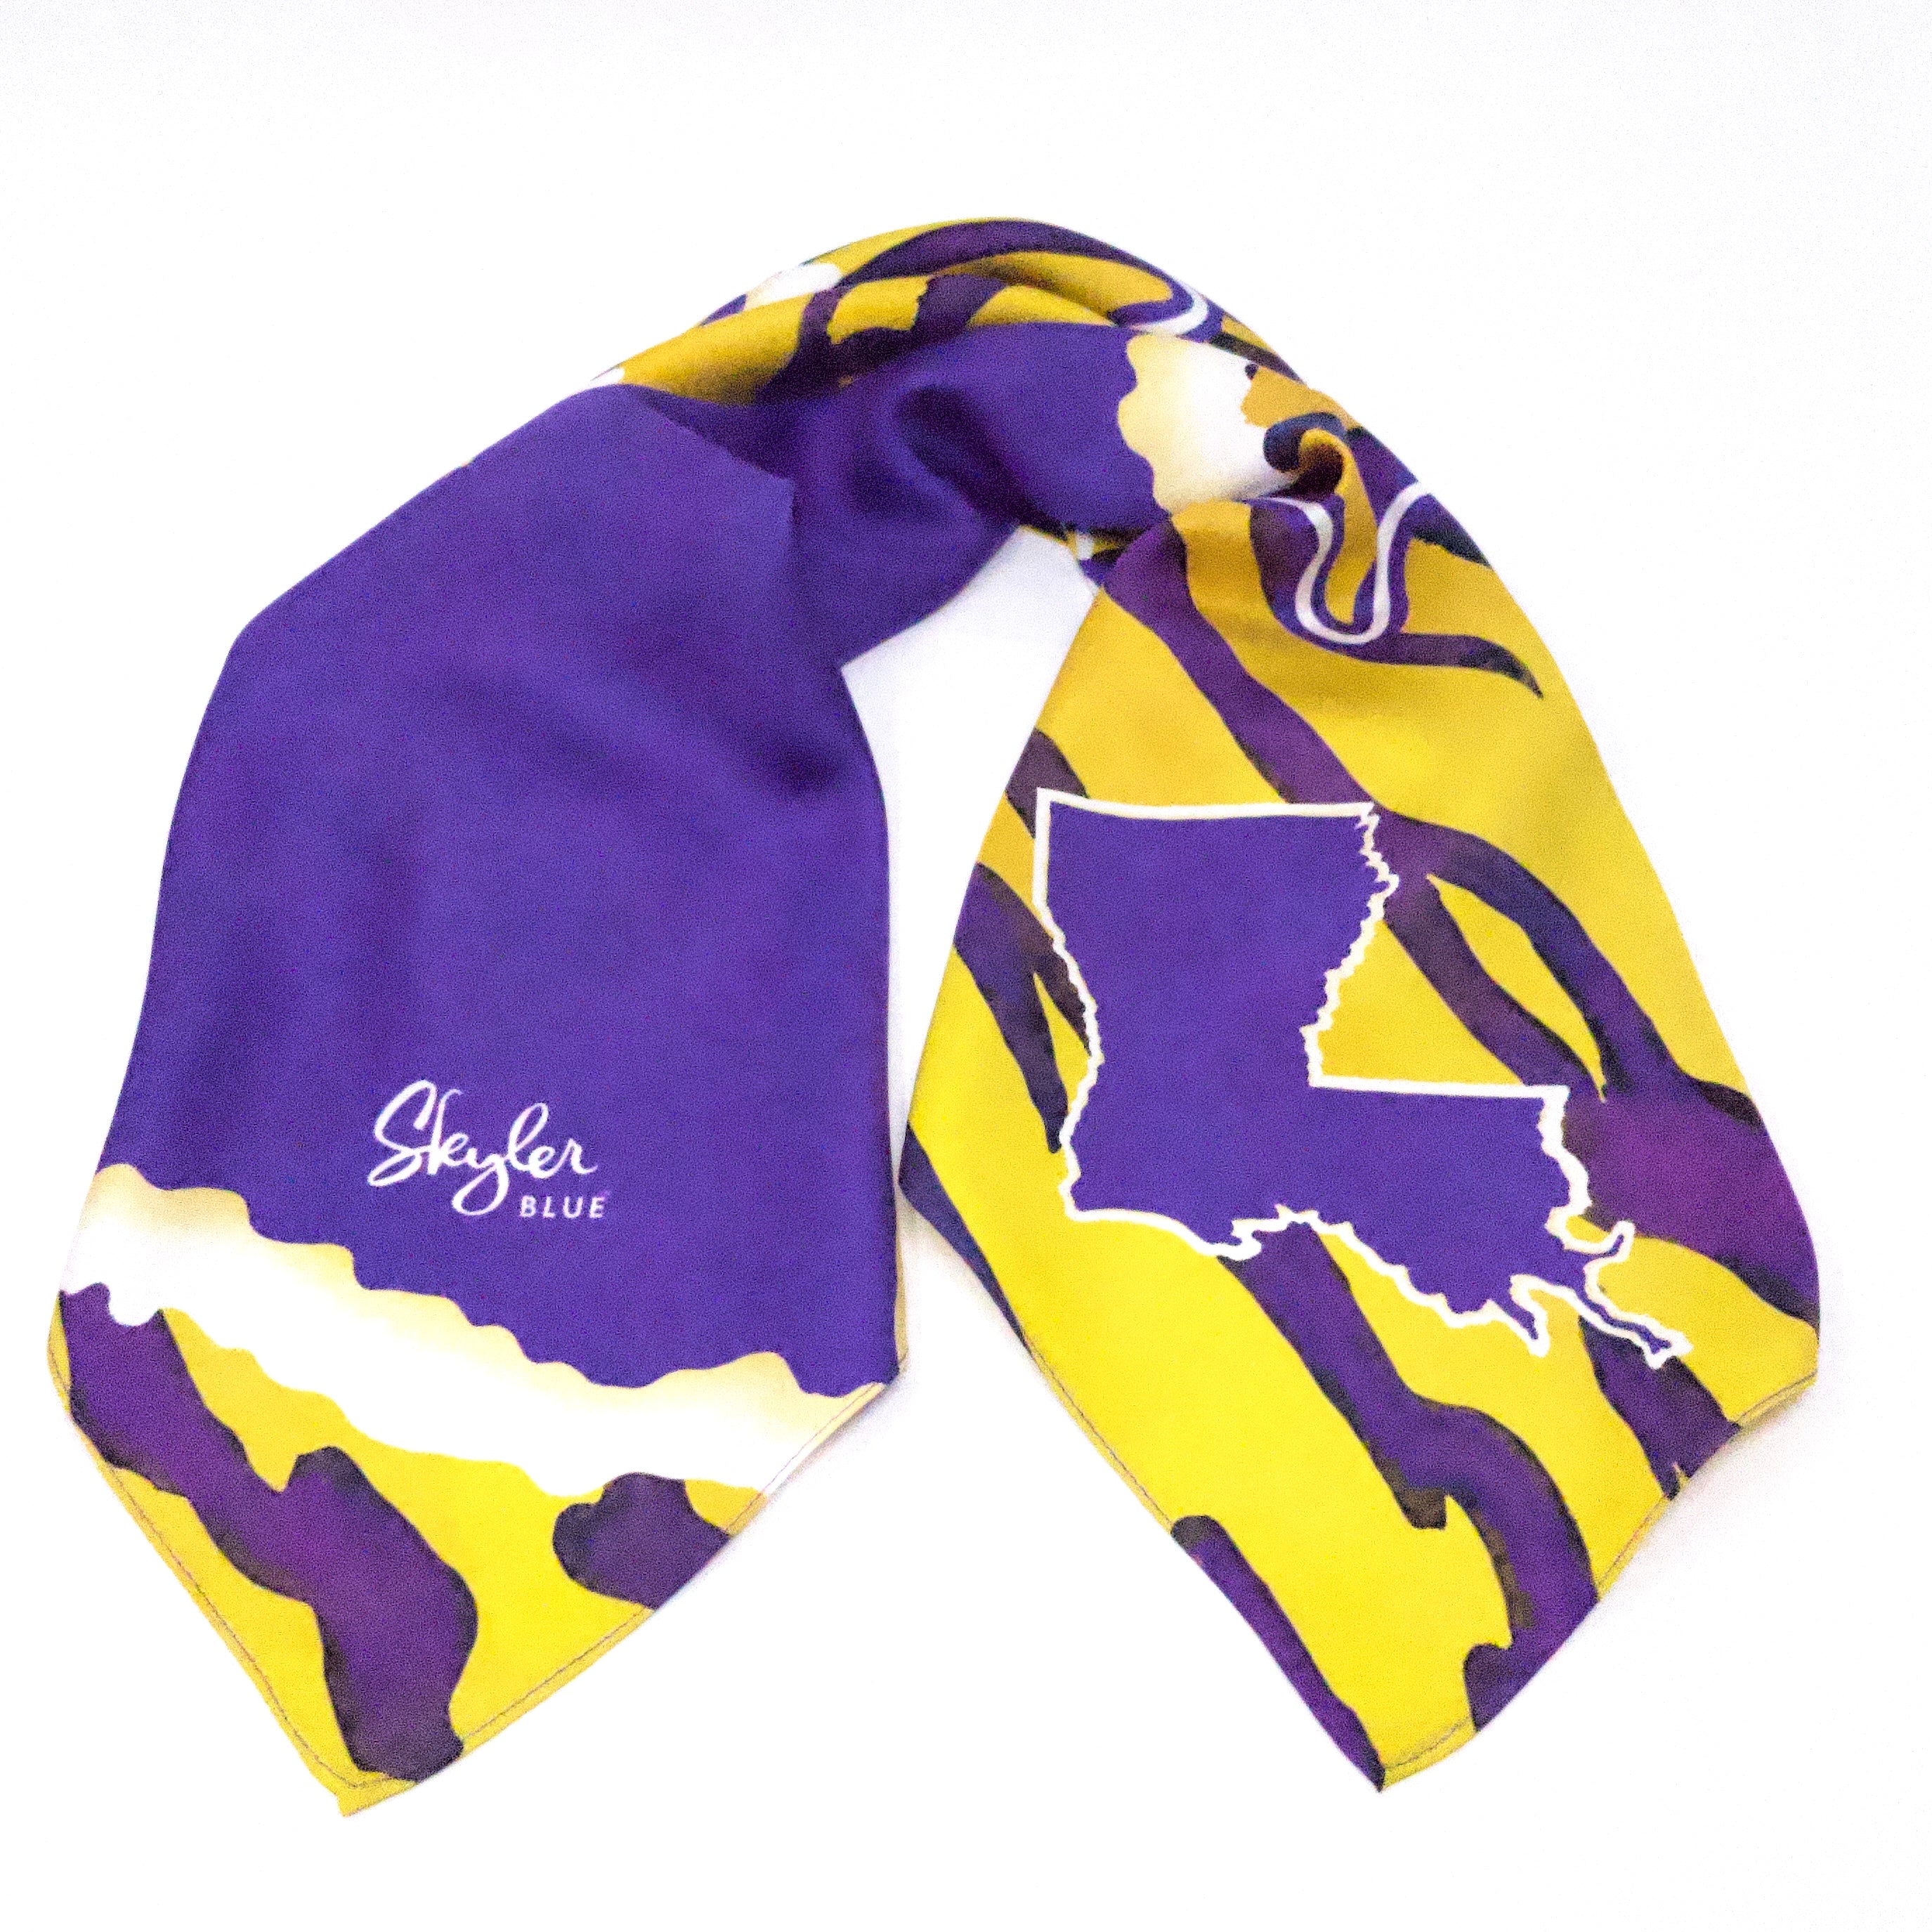 Skyler Blue’s The Baton Rouge 88-centimeter 100% silk twill scarf